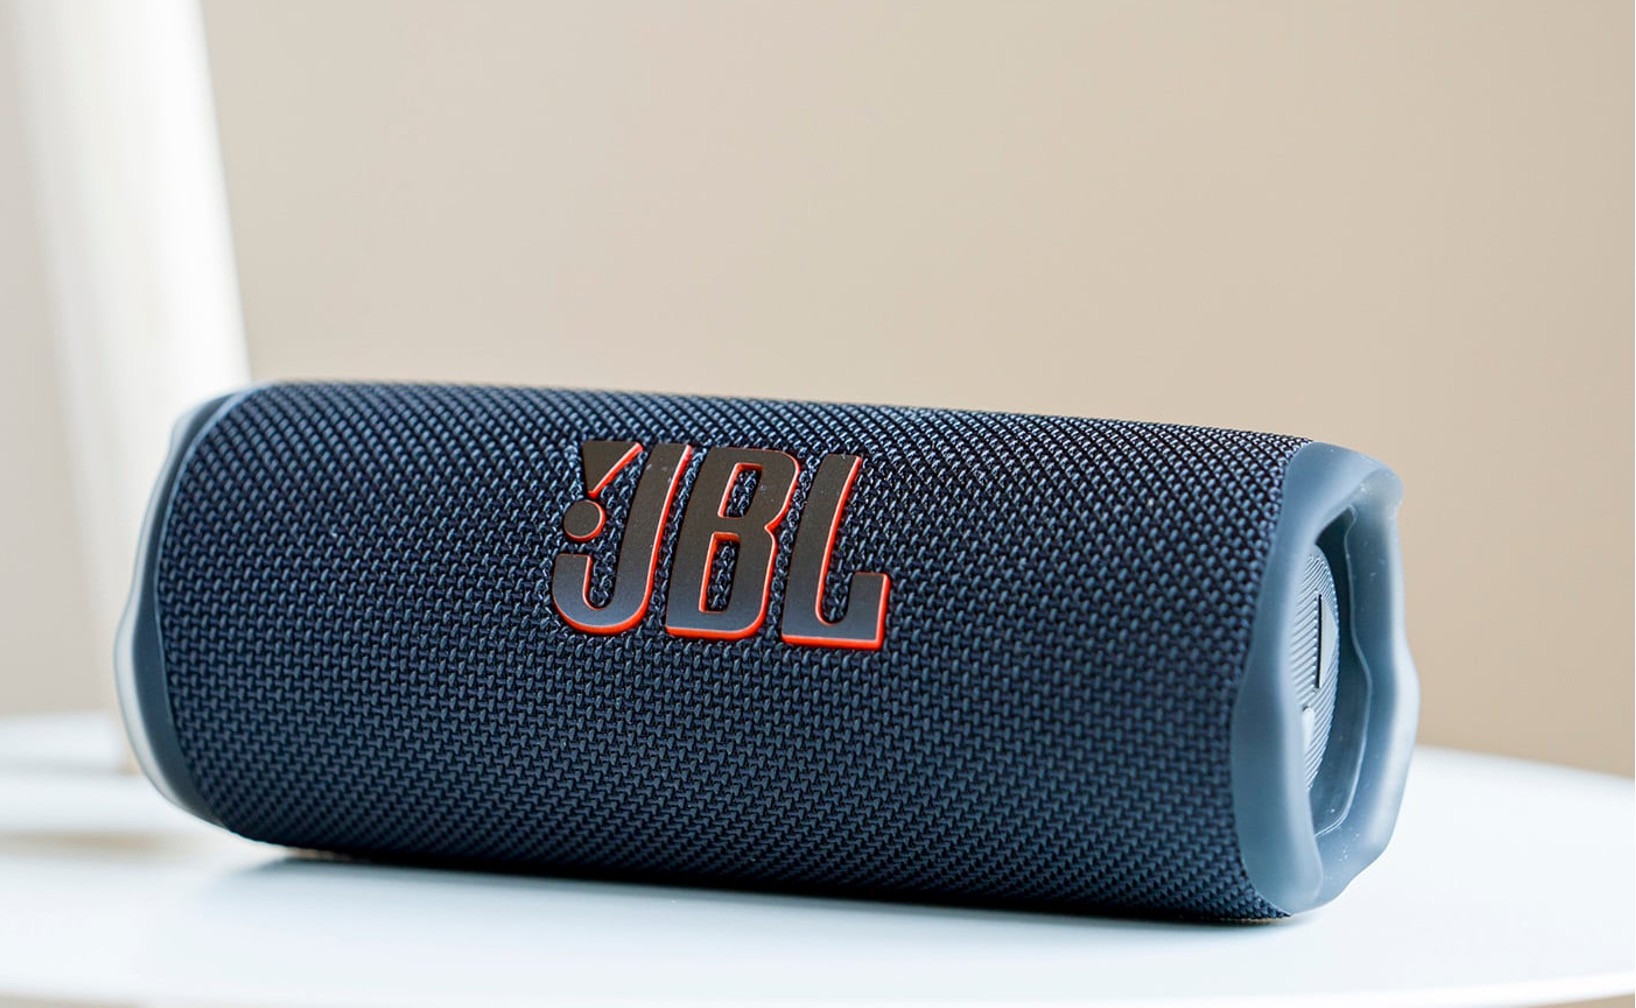 JBL Flip 6 review: The big little speaker